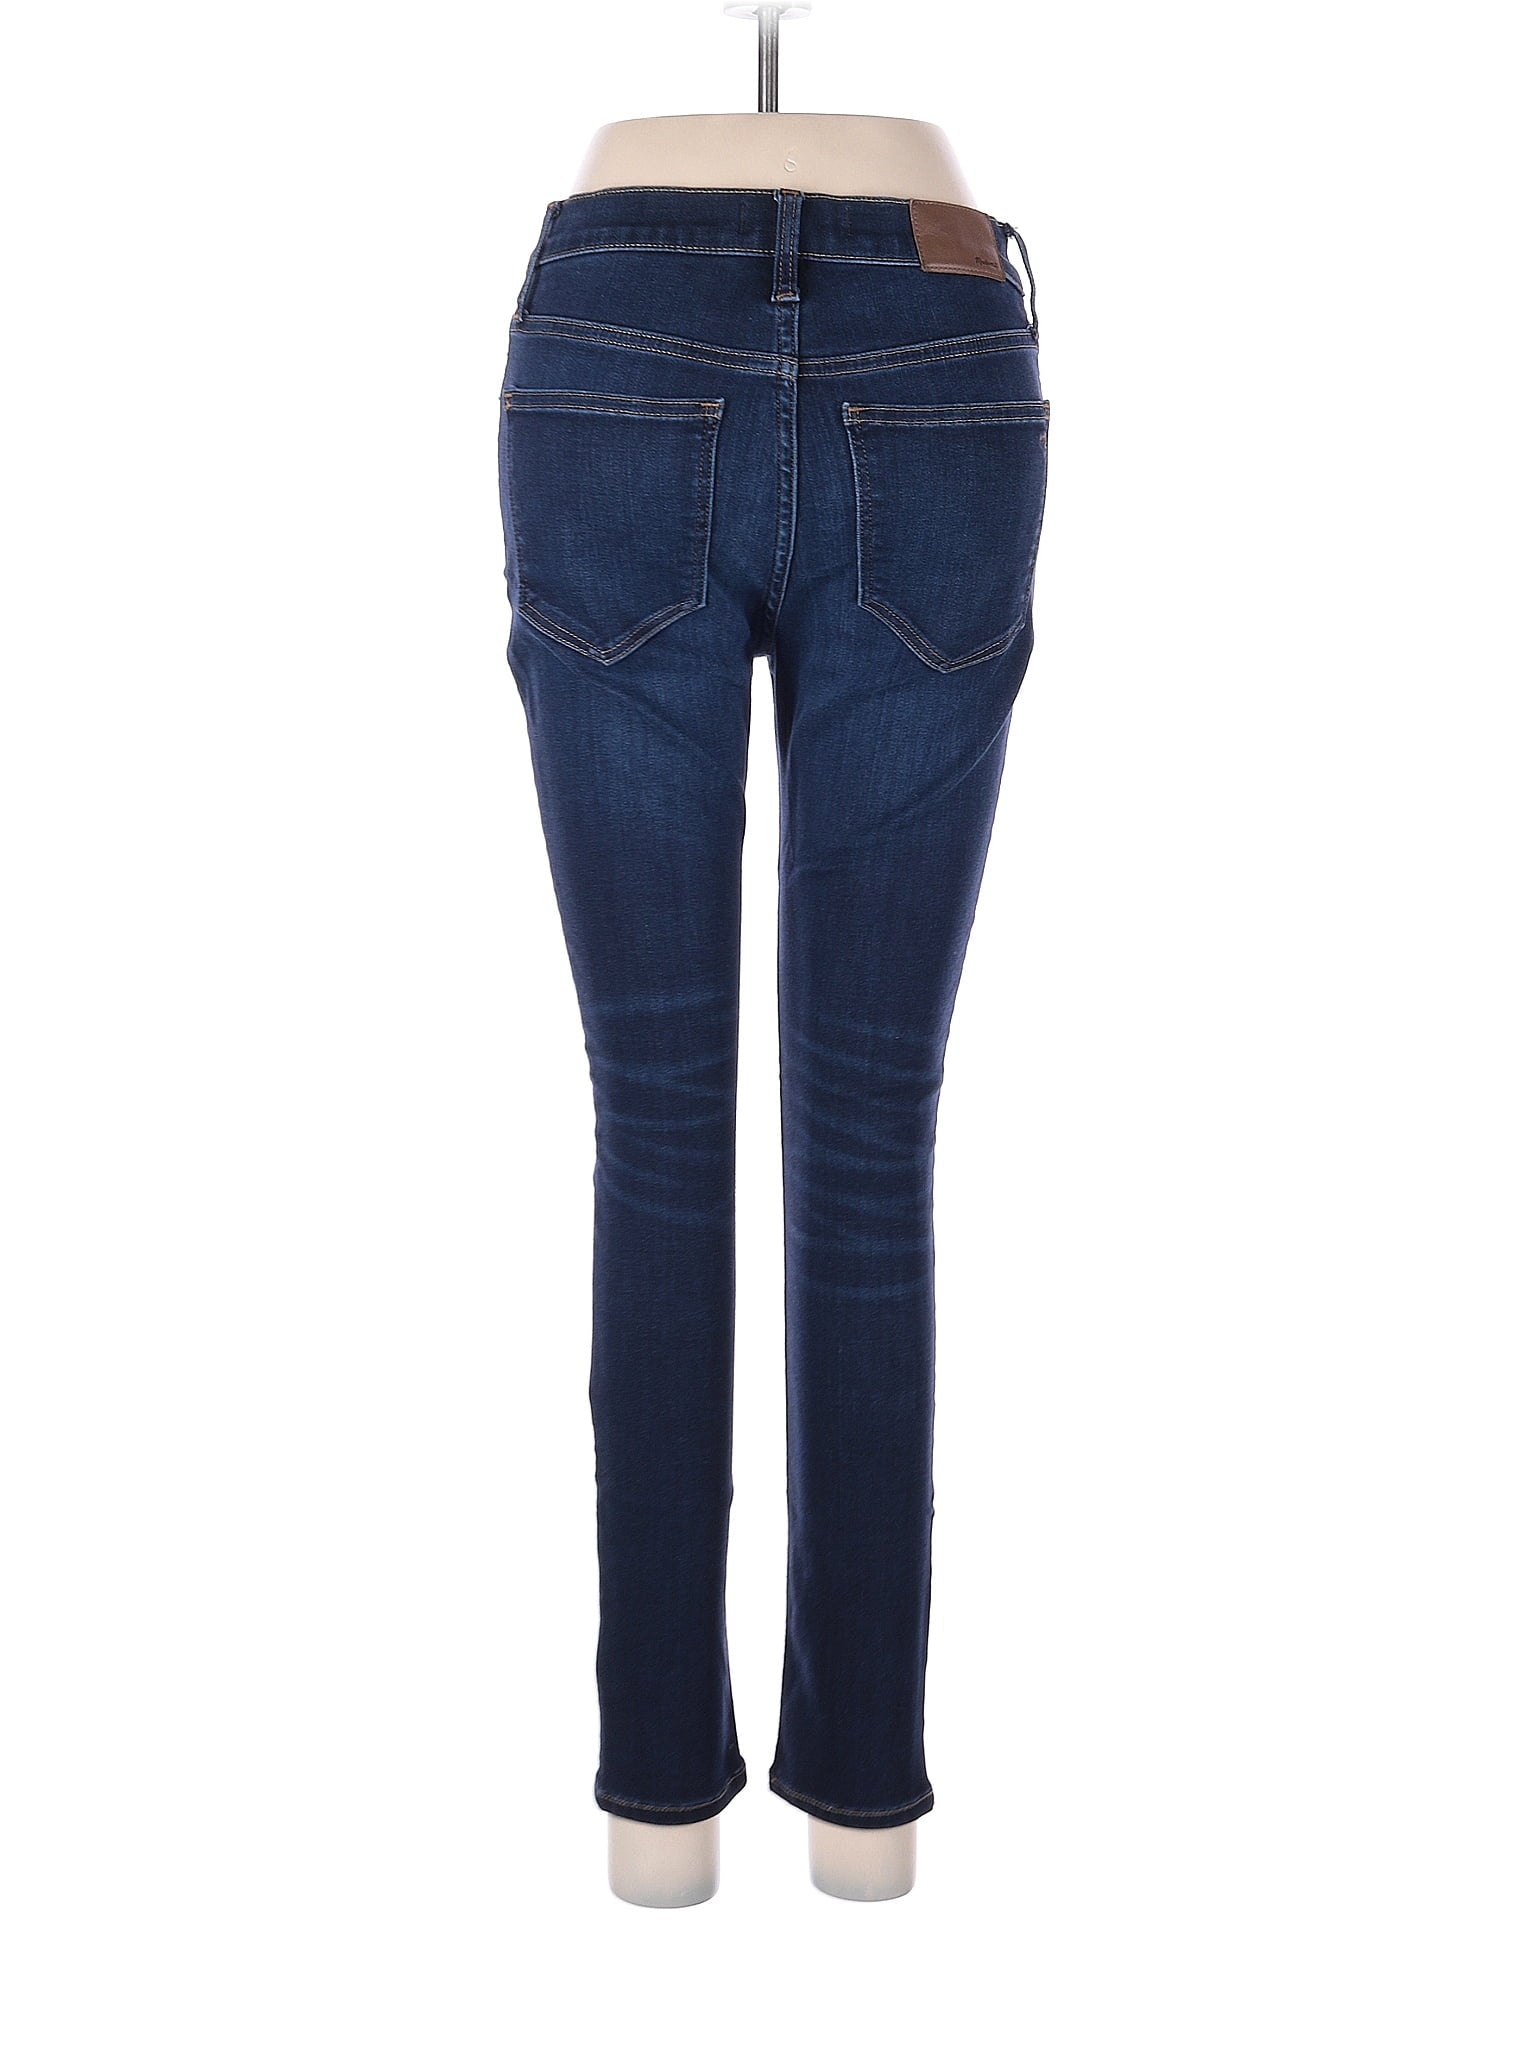 High-Rise Boyjeans Jeans in Dark Wash waist size - 28 P